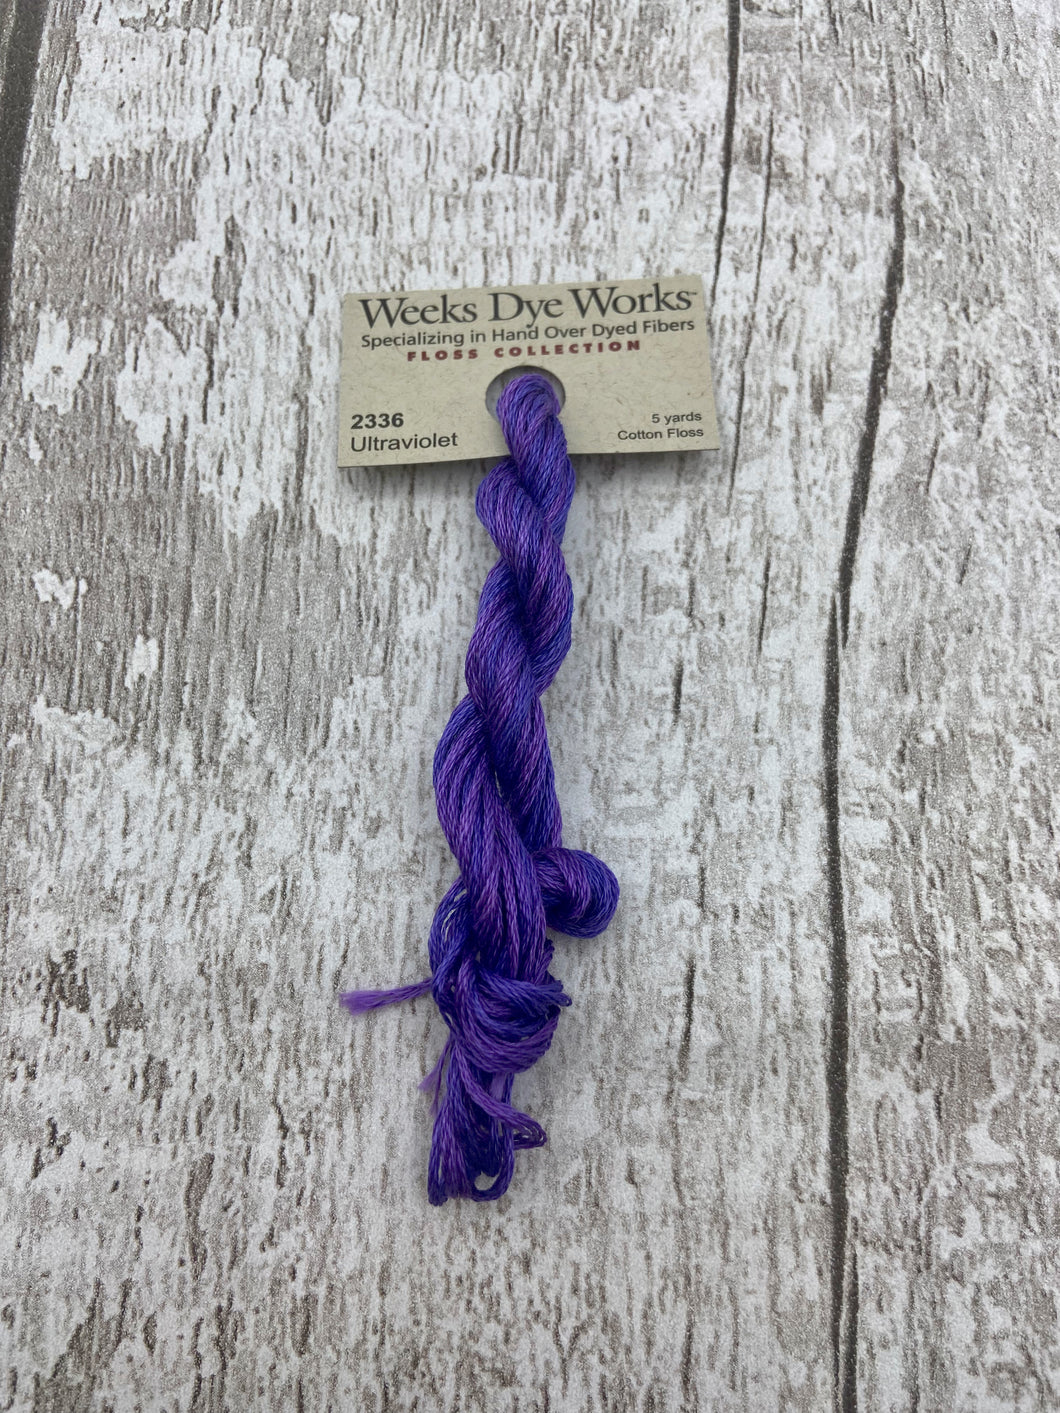 Ultraviolet (#2336) Weeks Dye Works, 6-strand cotton floss